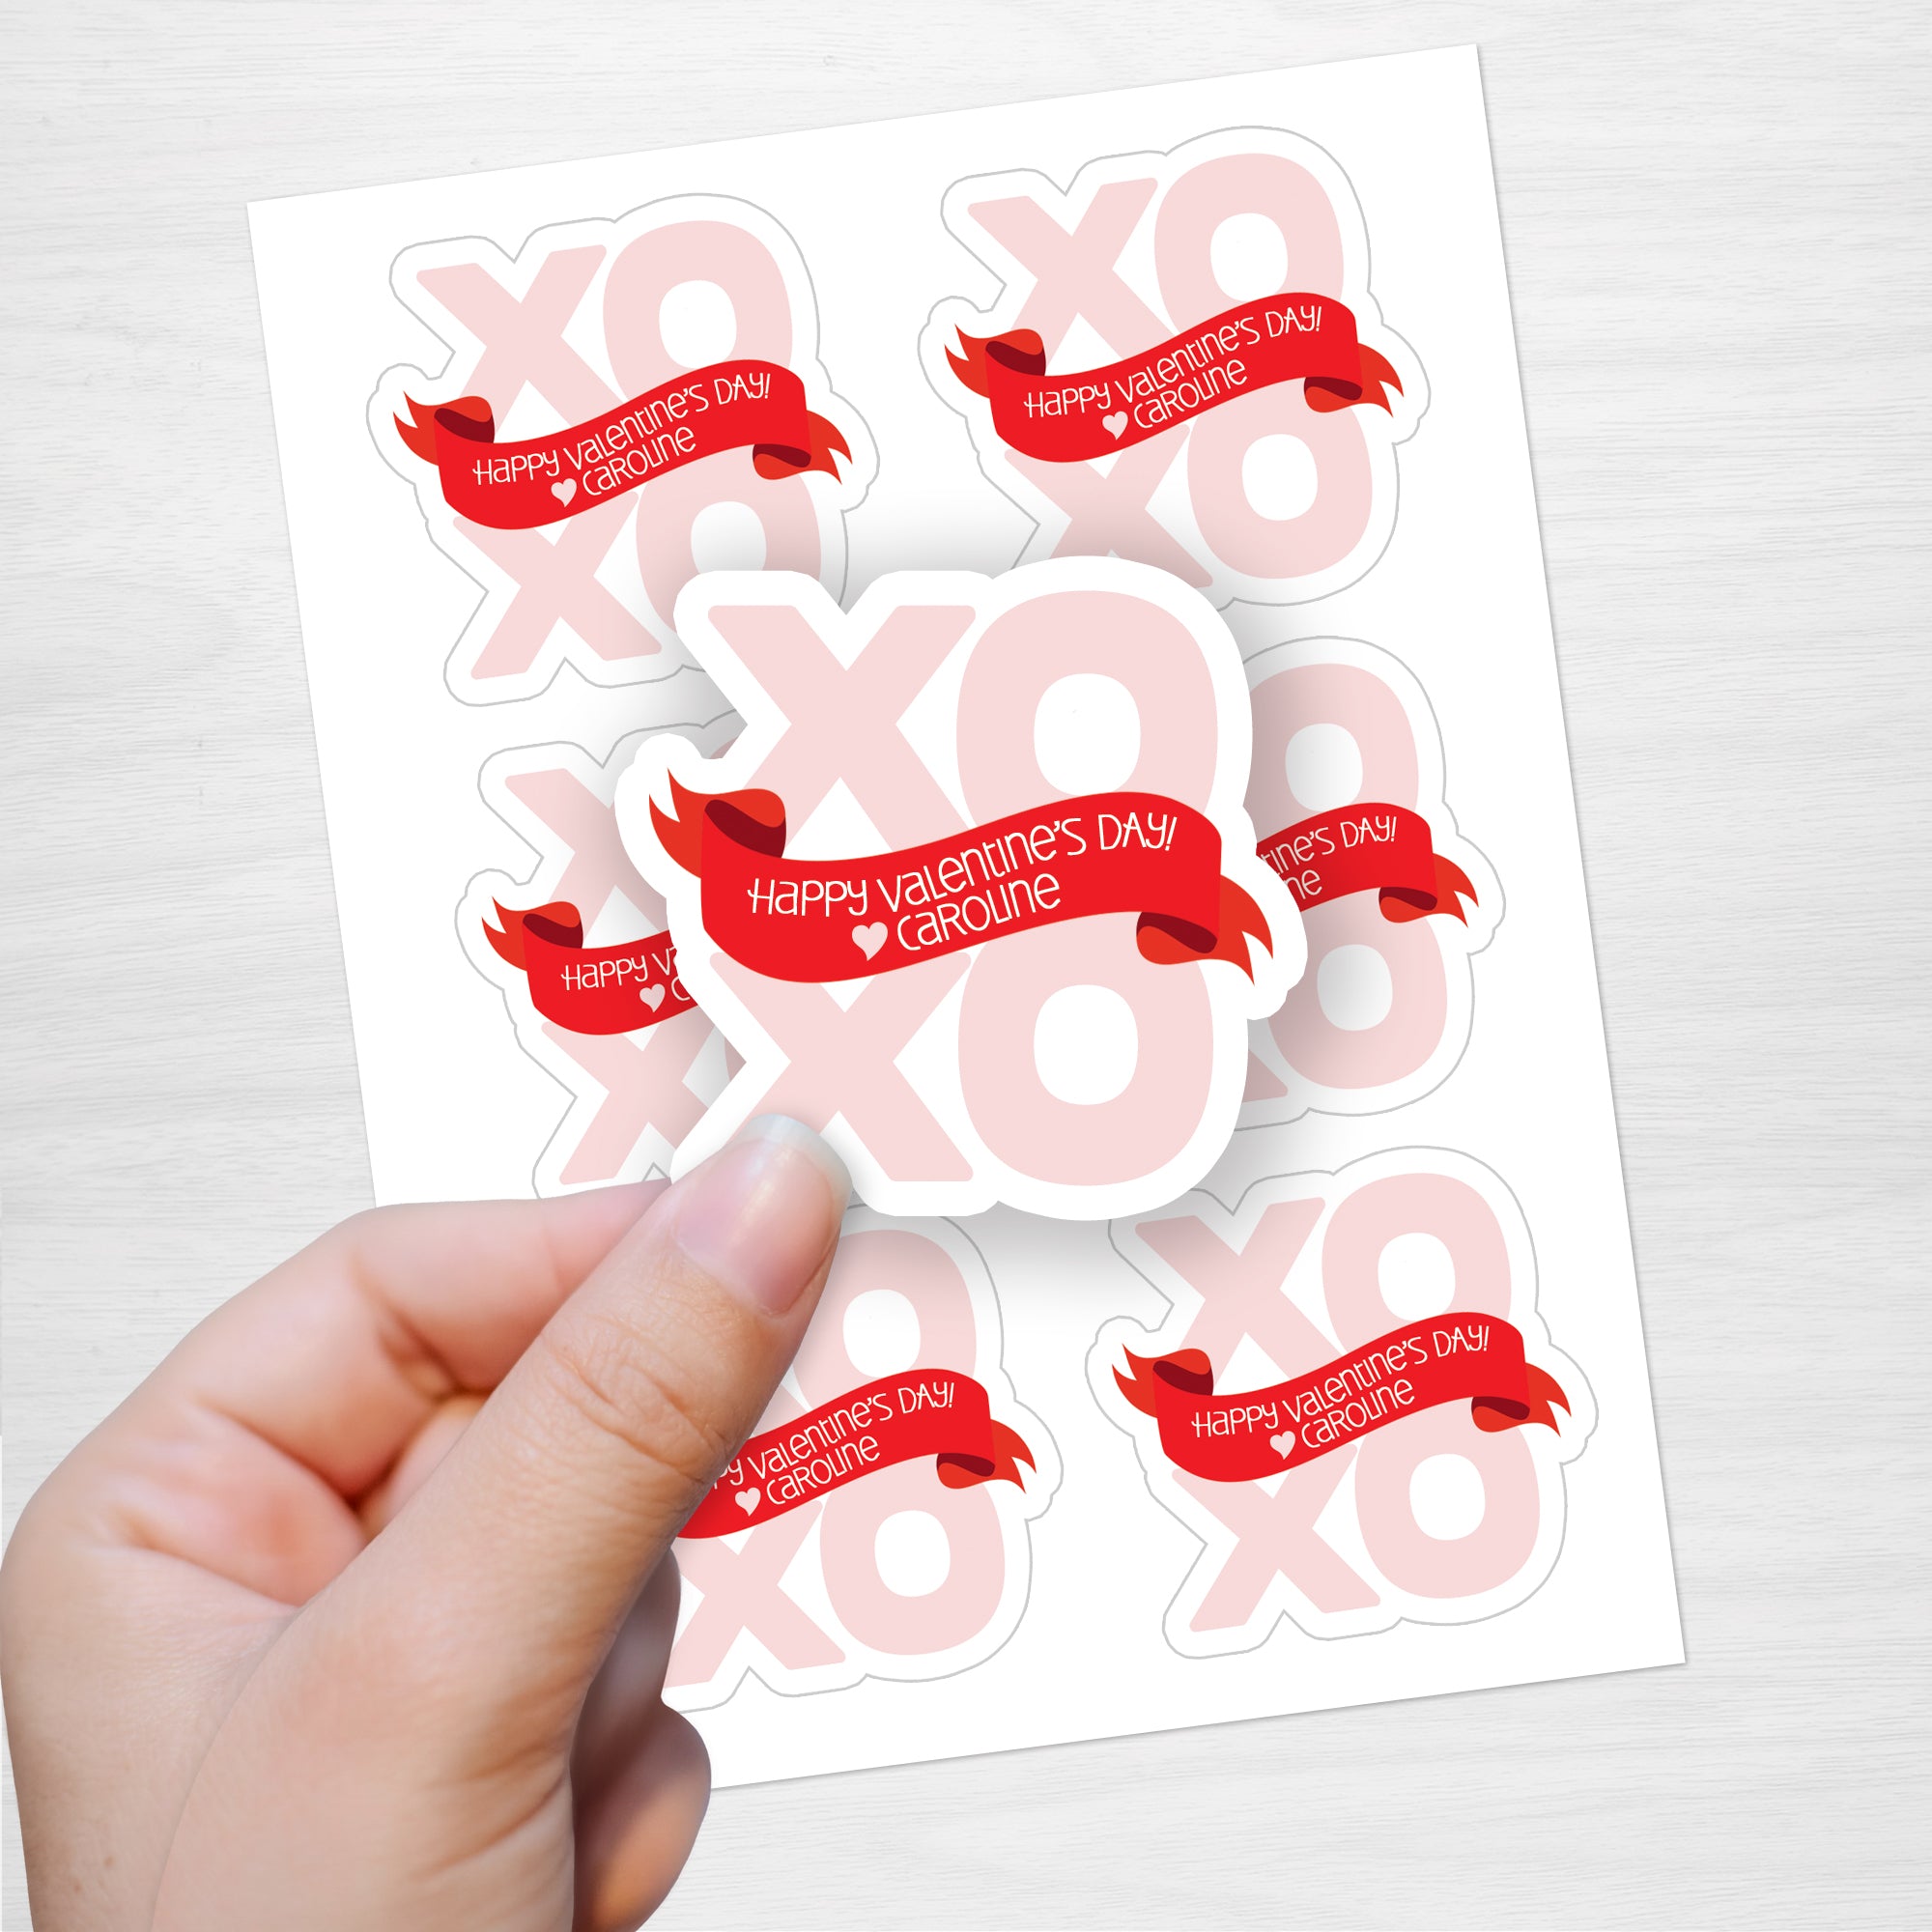 XOXO Personalized Valentine's Day Stickers, Die Cut